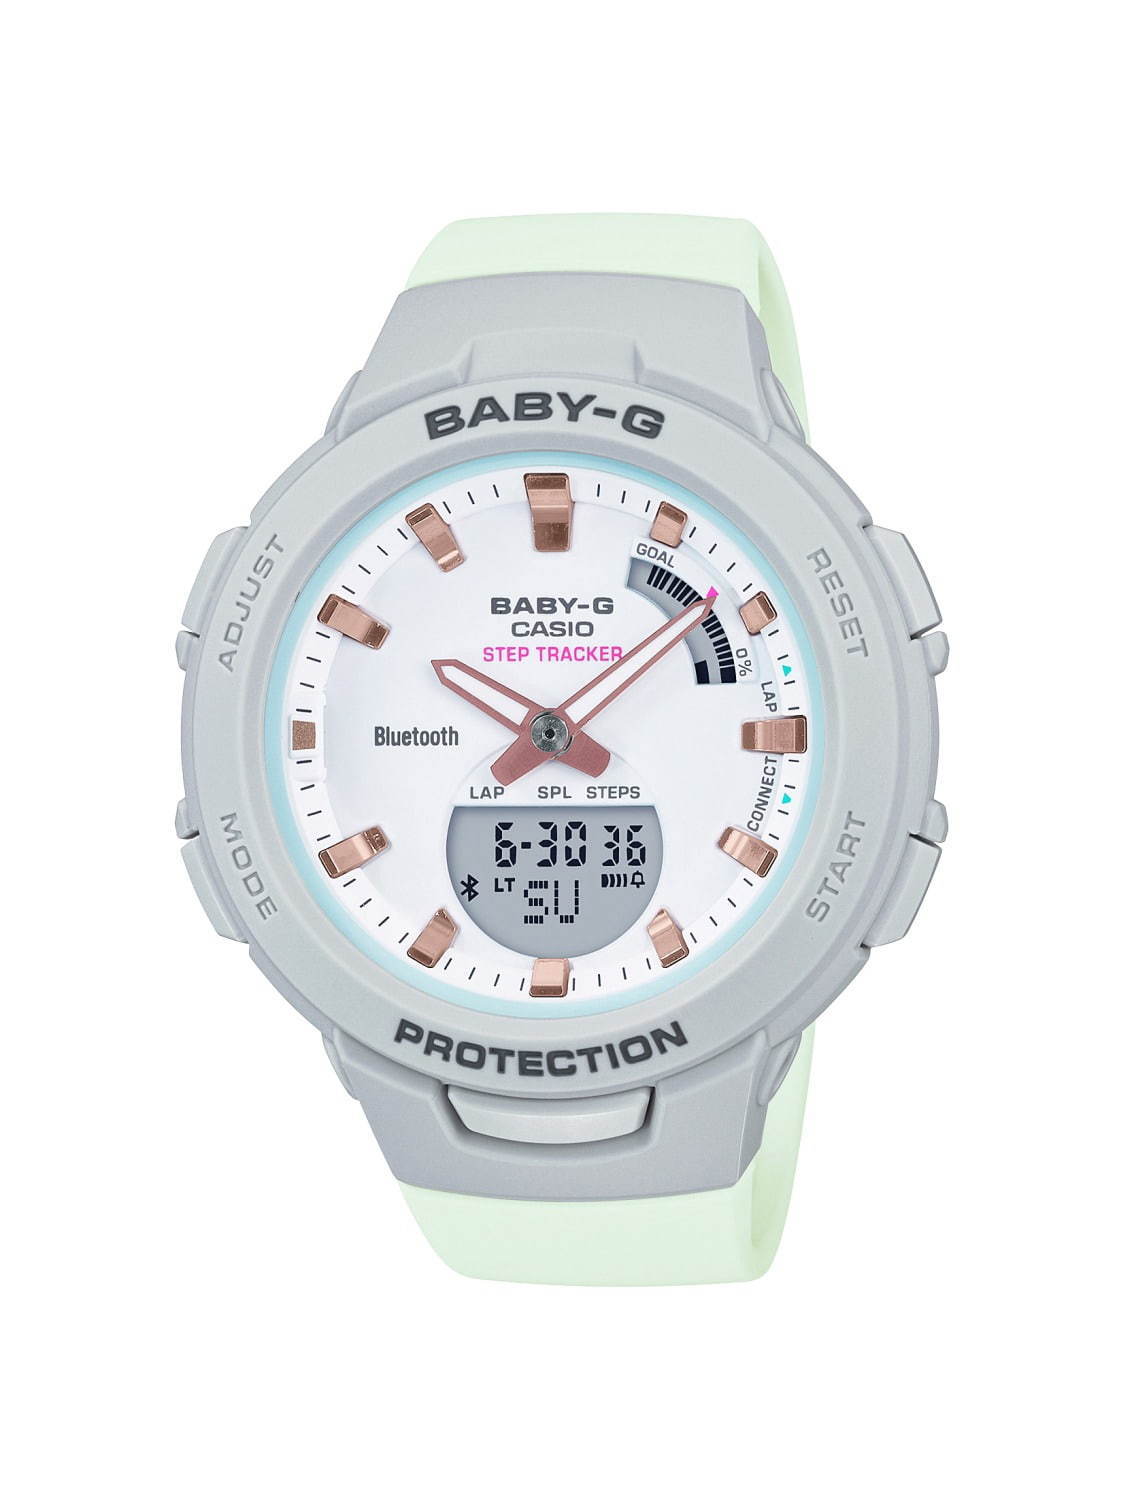 Baby G スポーツシーン に特化した新作腕時計 スマホ連携で歩数計測や消費カロリー管理 ファッションプレス